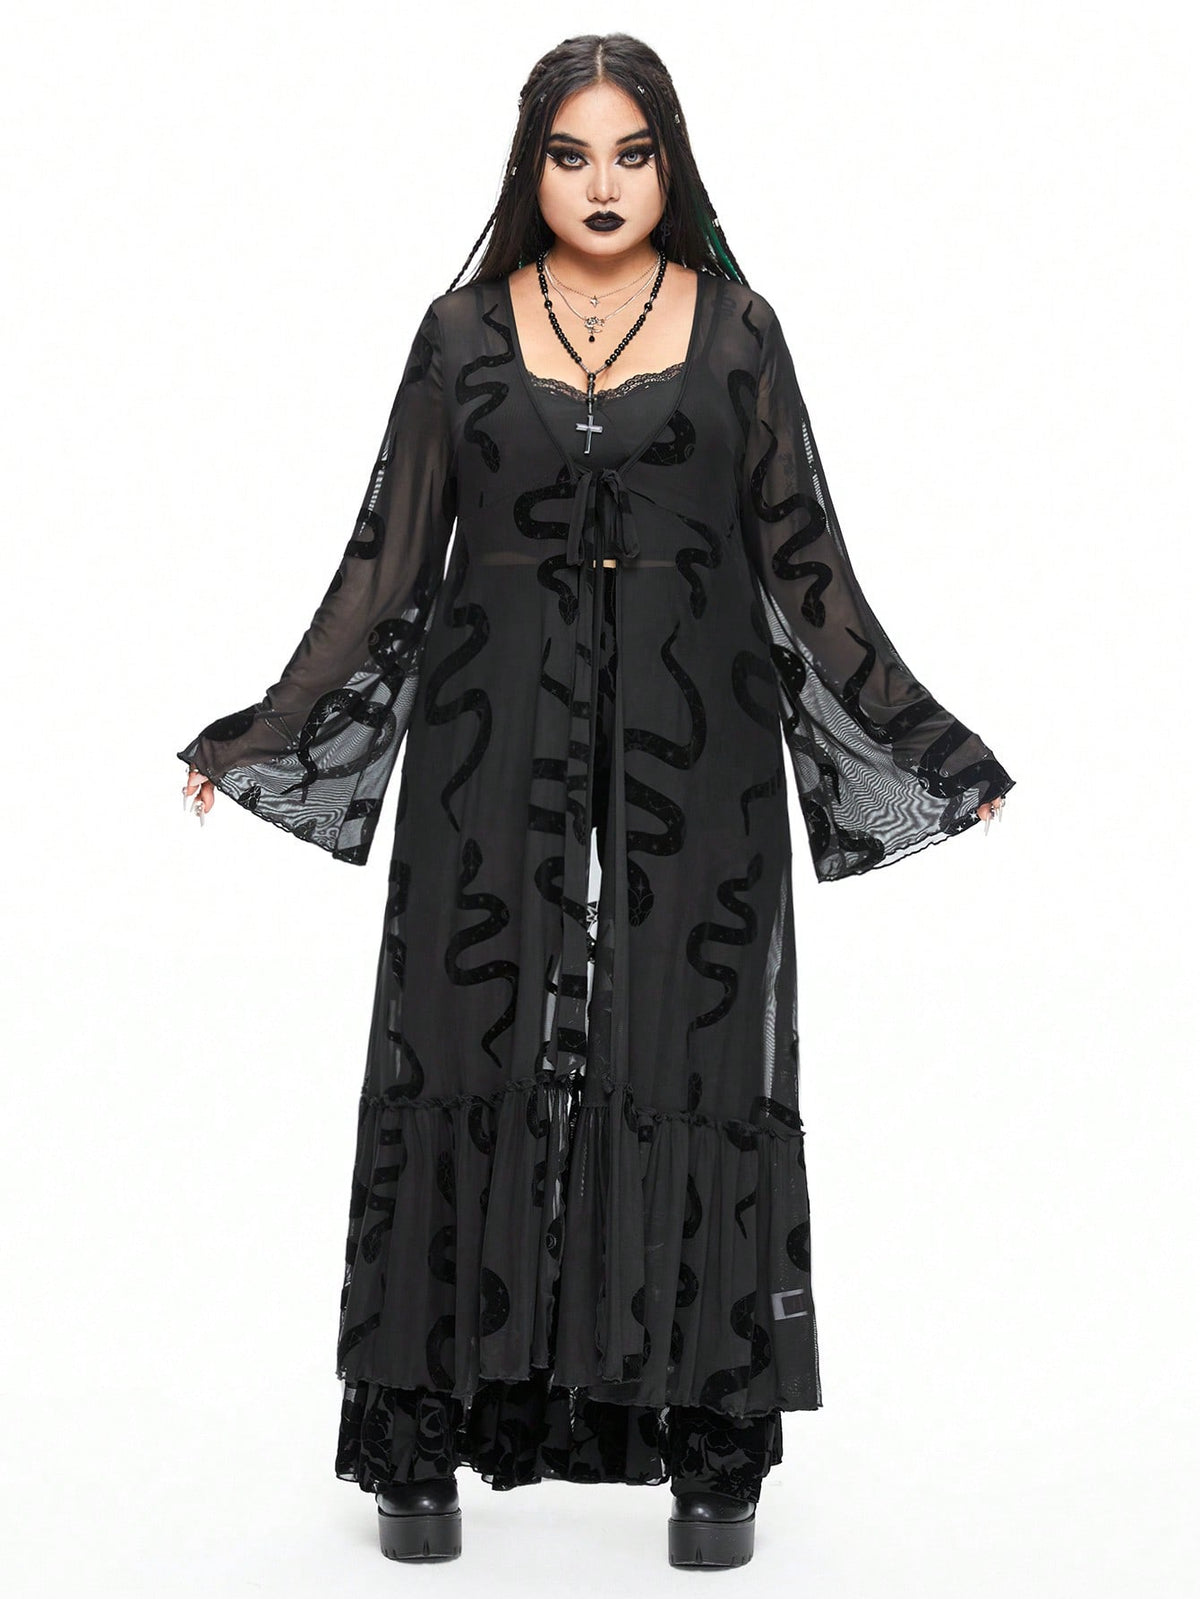 ROMWE Goth Black Gothic Mesh Snake Pattern Flocked Plus Size Women's Long See-Through Cardigan